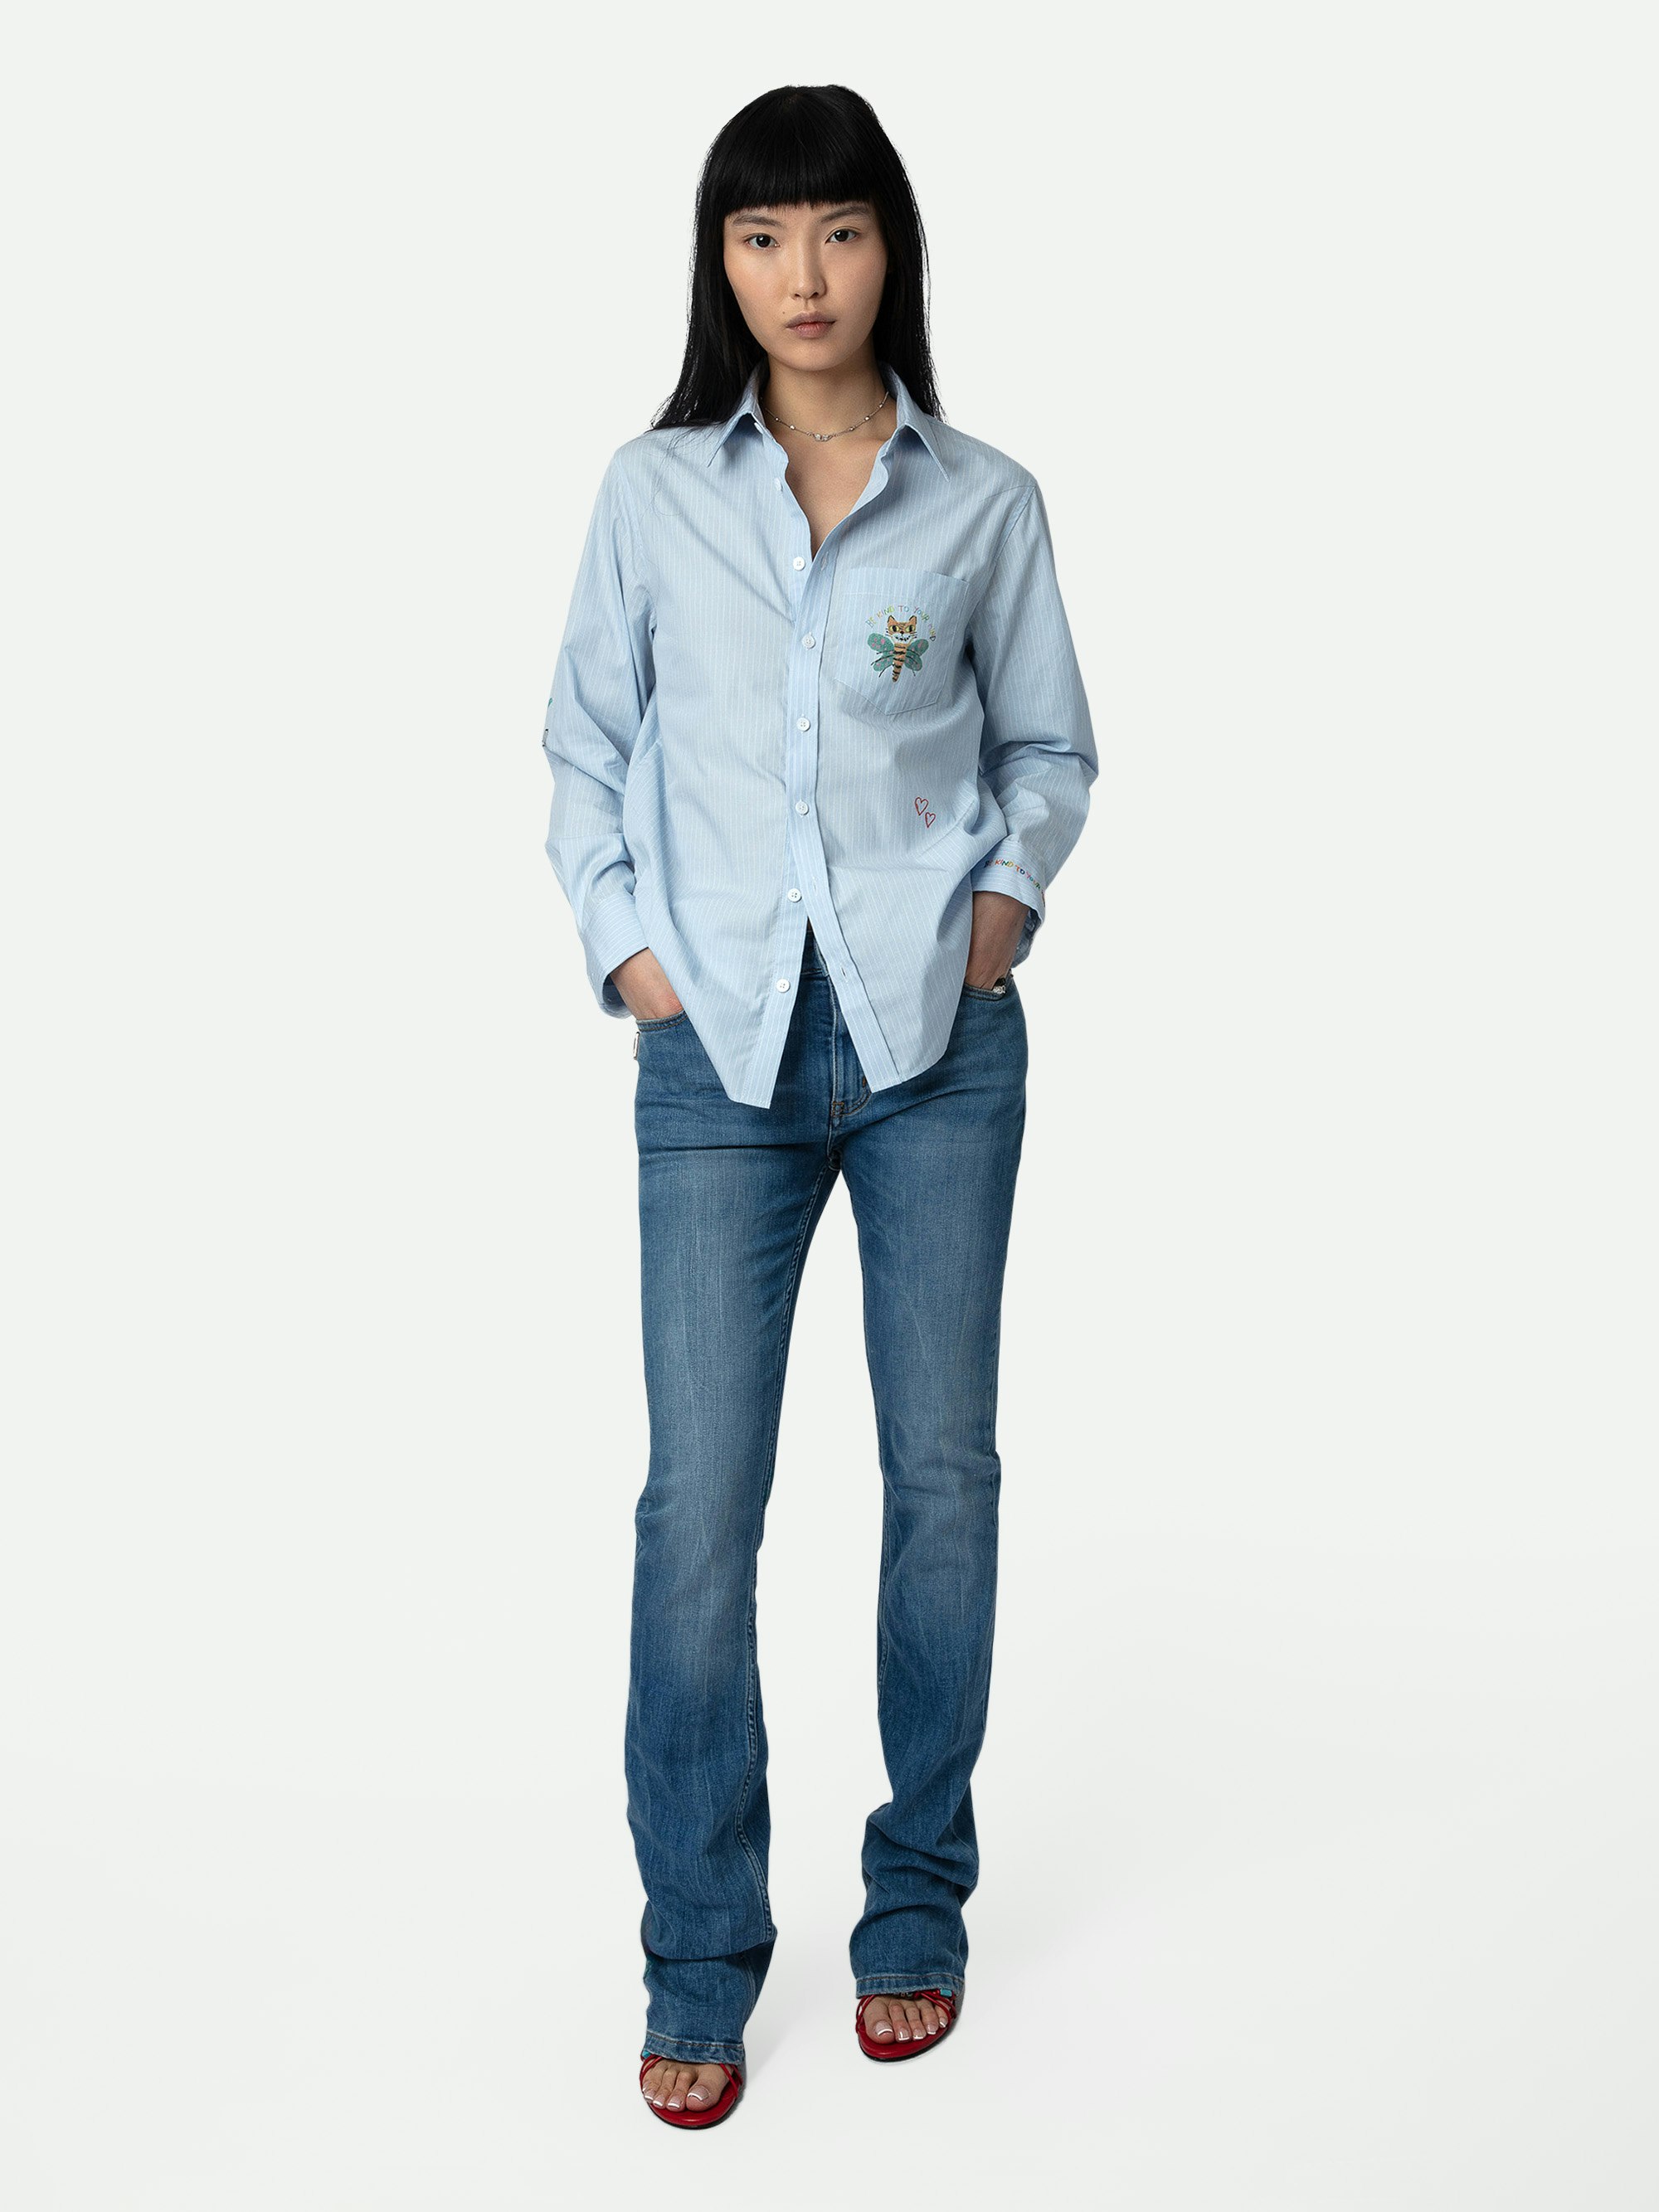 Taskiz Shirt - Blue cotton long-sleeved shirt with stripes and customized details designed by Humberto Cruz.